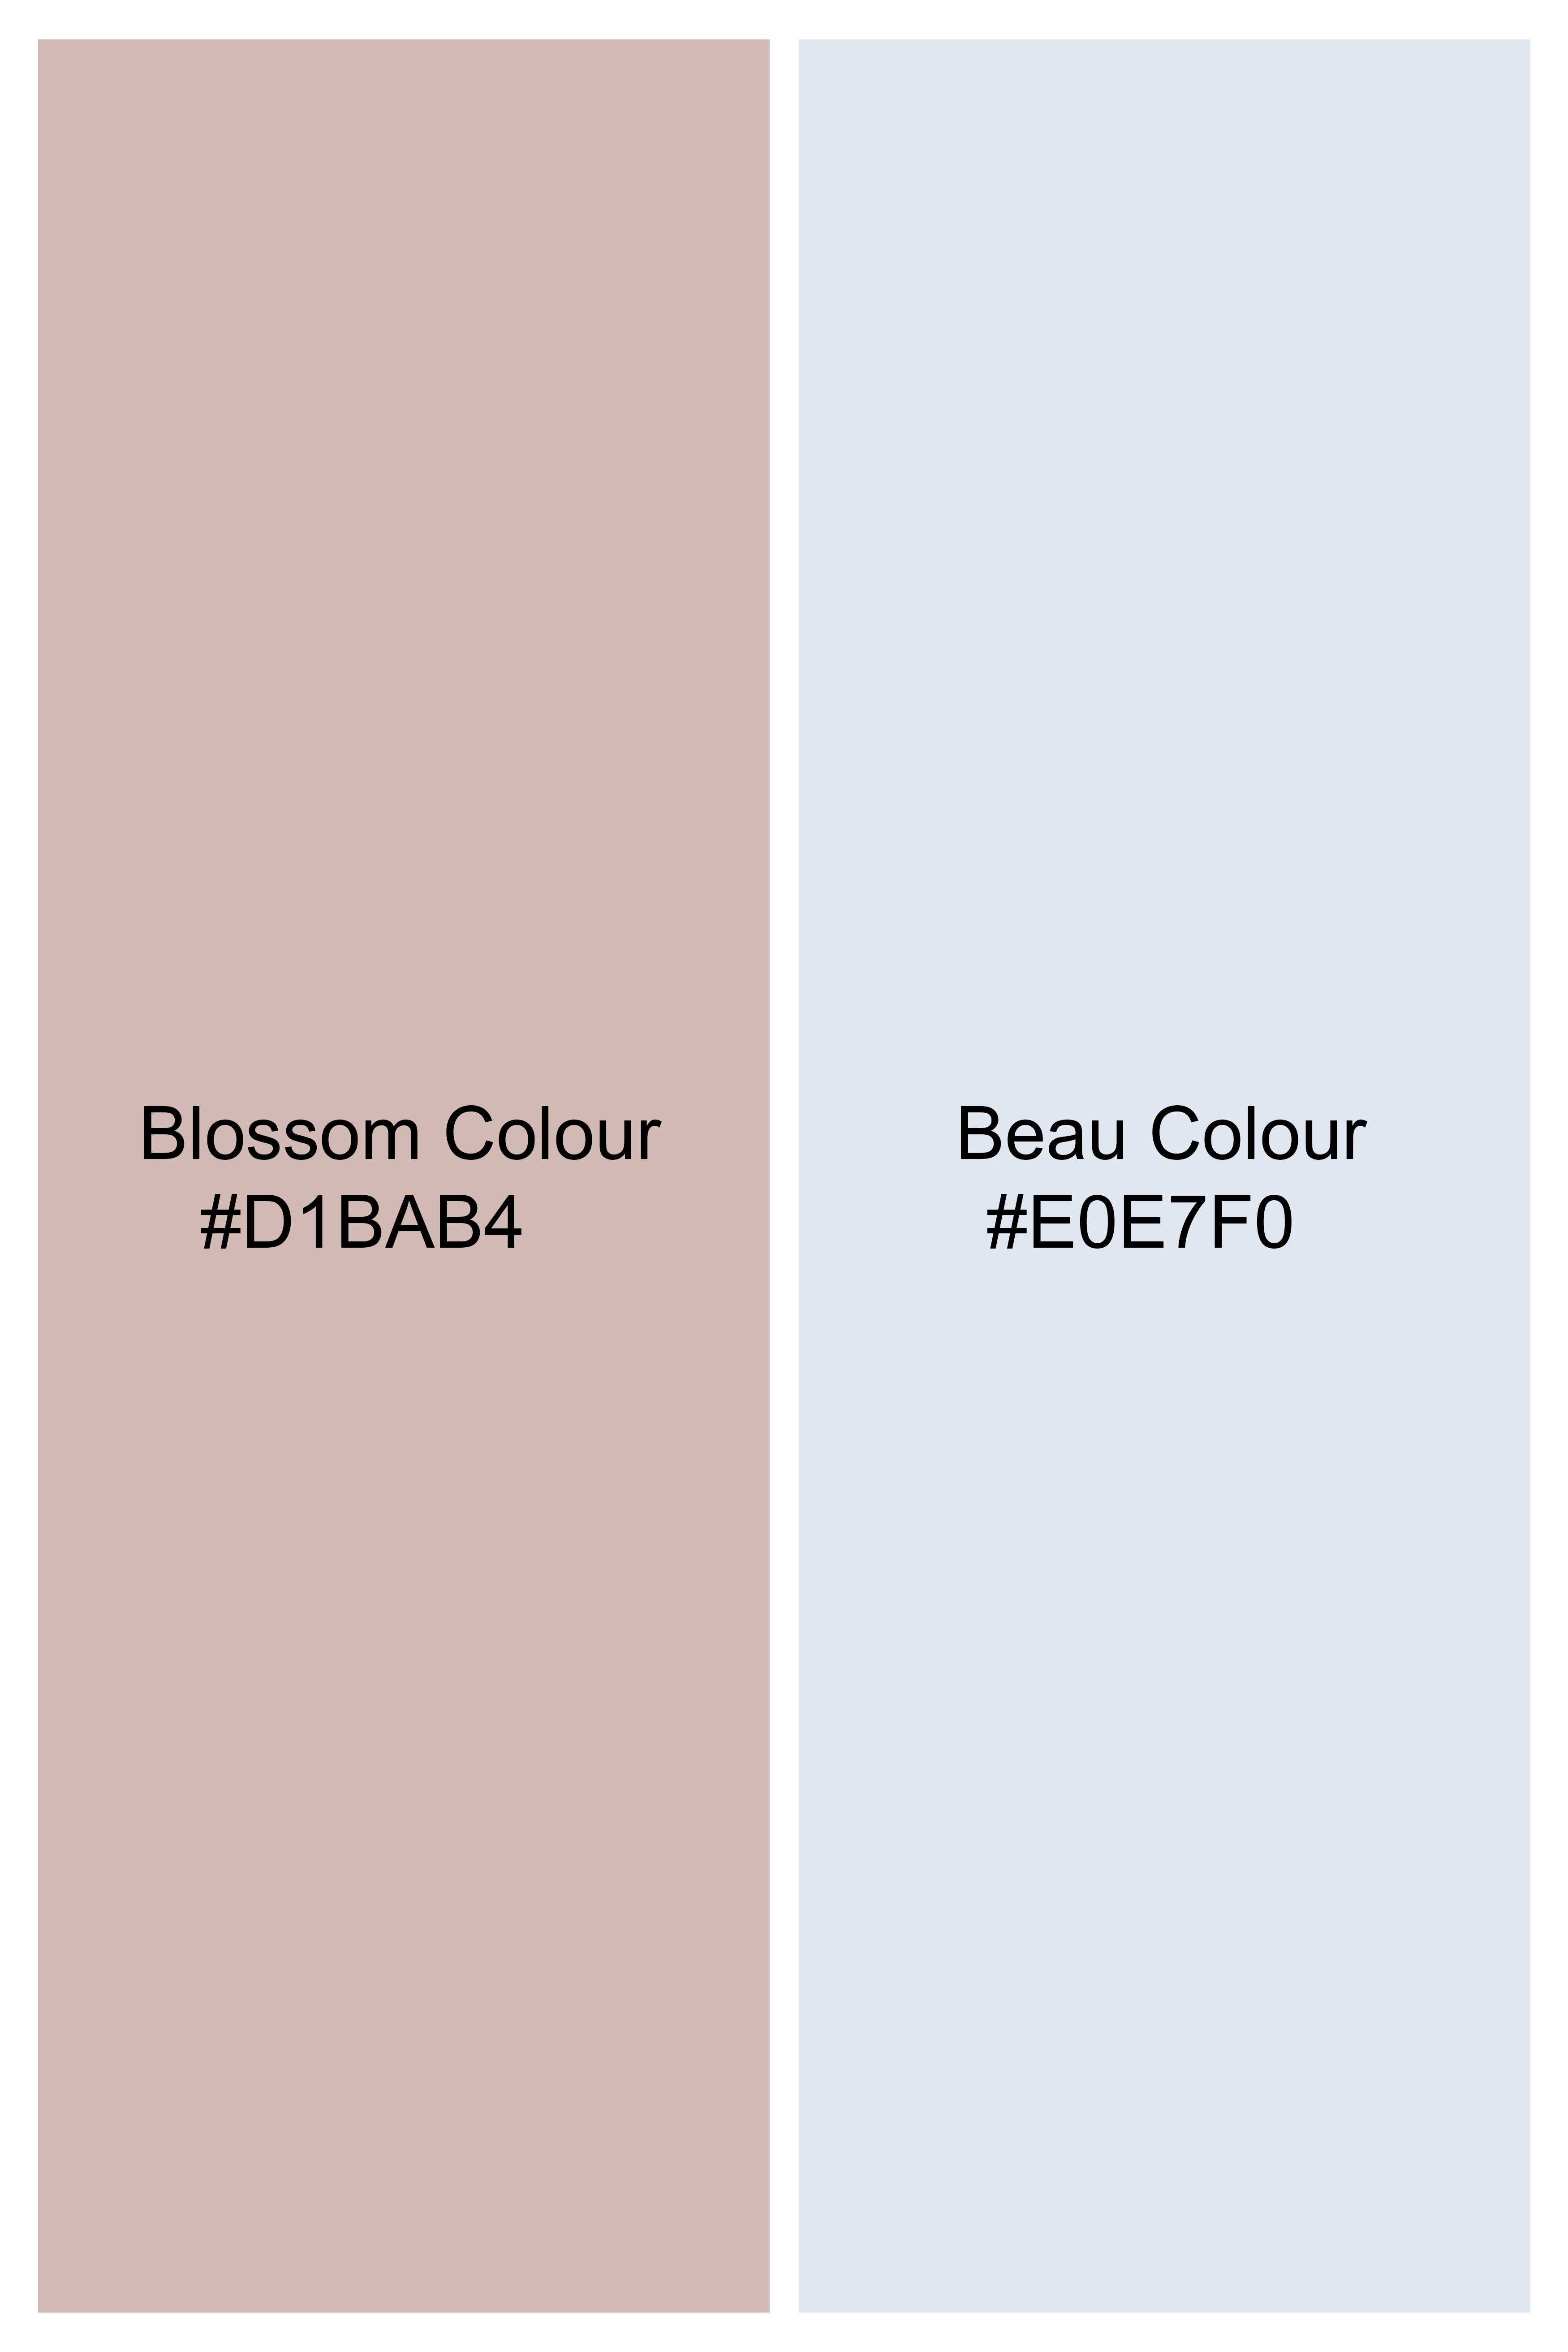 Blossom Brown and Beau Blue Hand Painted Premium Cotton Jersey Sweatshirt,TS515-W01-ART-S, TS515-W01-ART-M, TS515-W01-ART-L, TS515-W01-ART-XL, TS515-W01-ART-XXL